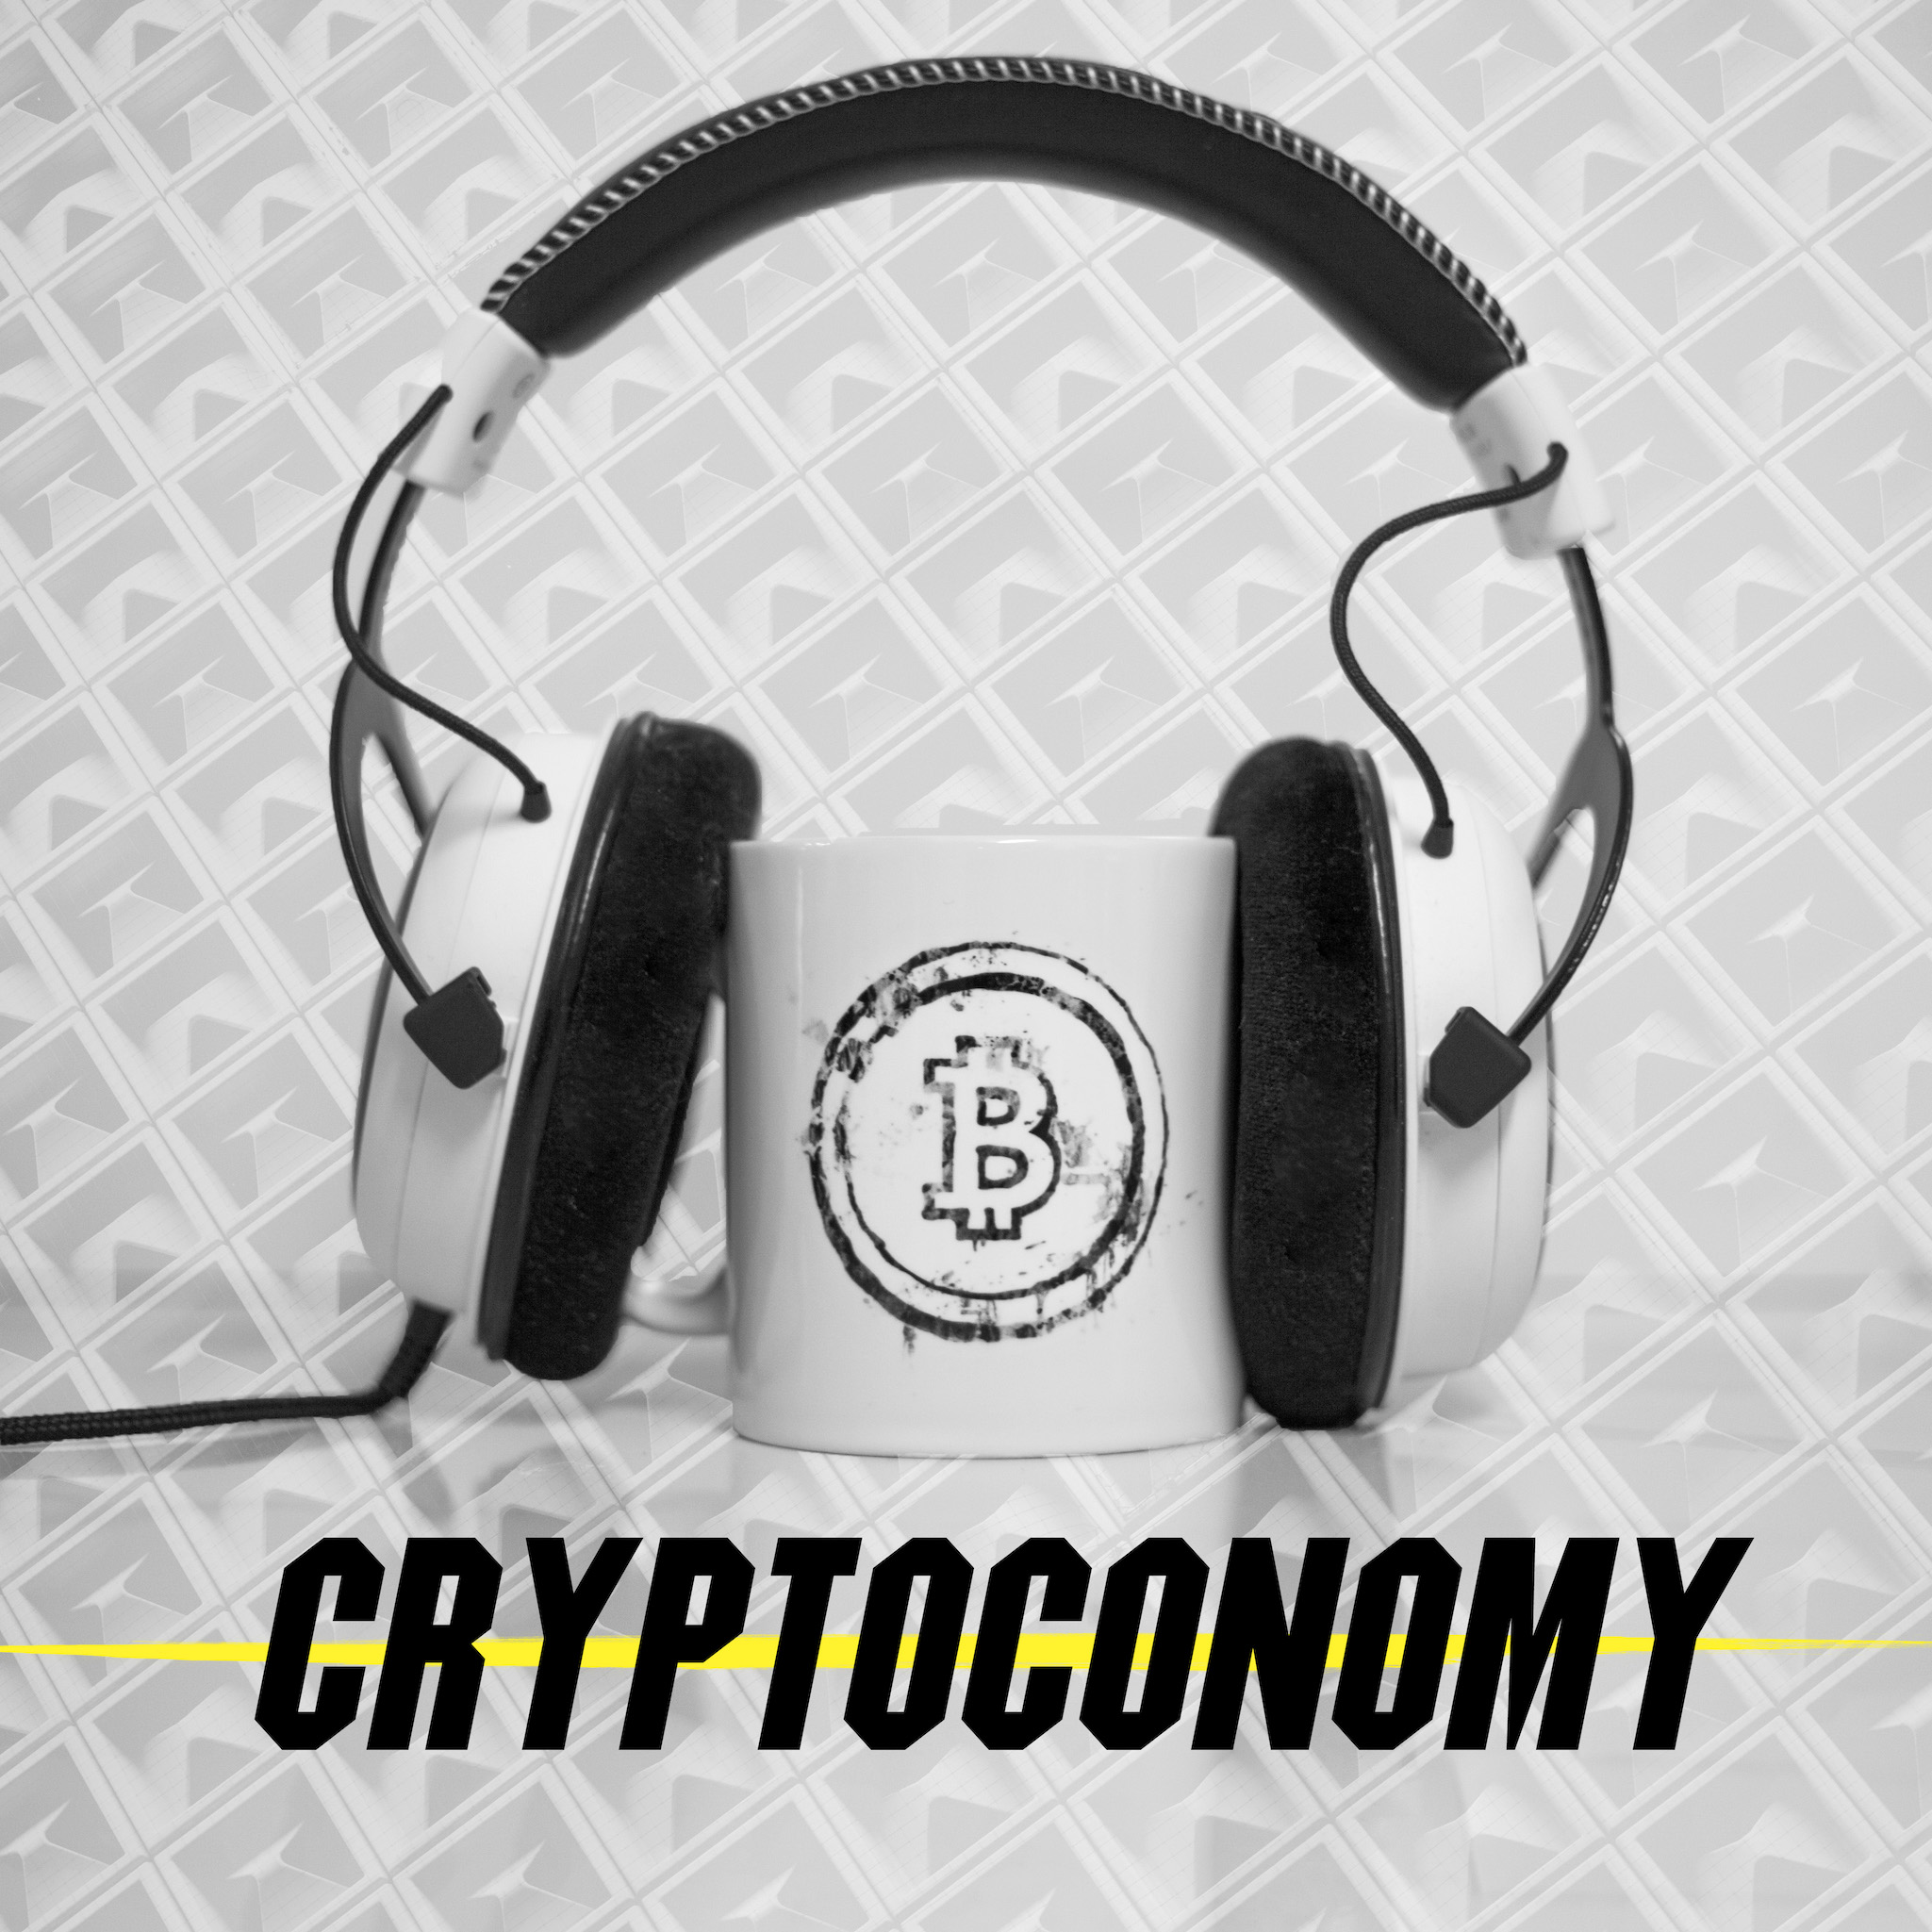 CryptoQuikRead_034 - Bitcoin and the Rise of the Cypherpunks